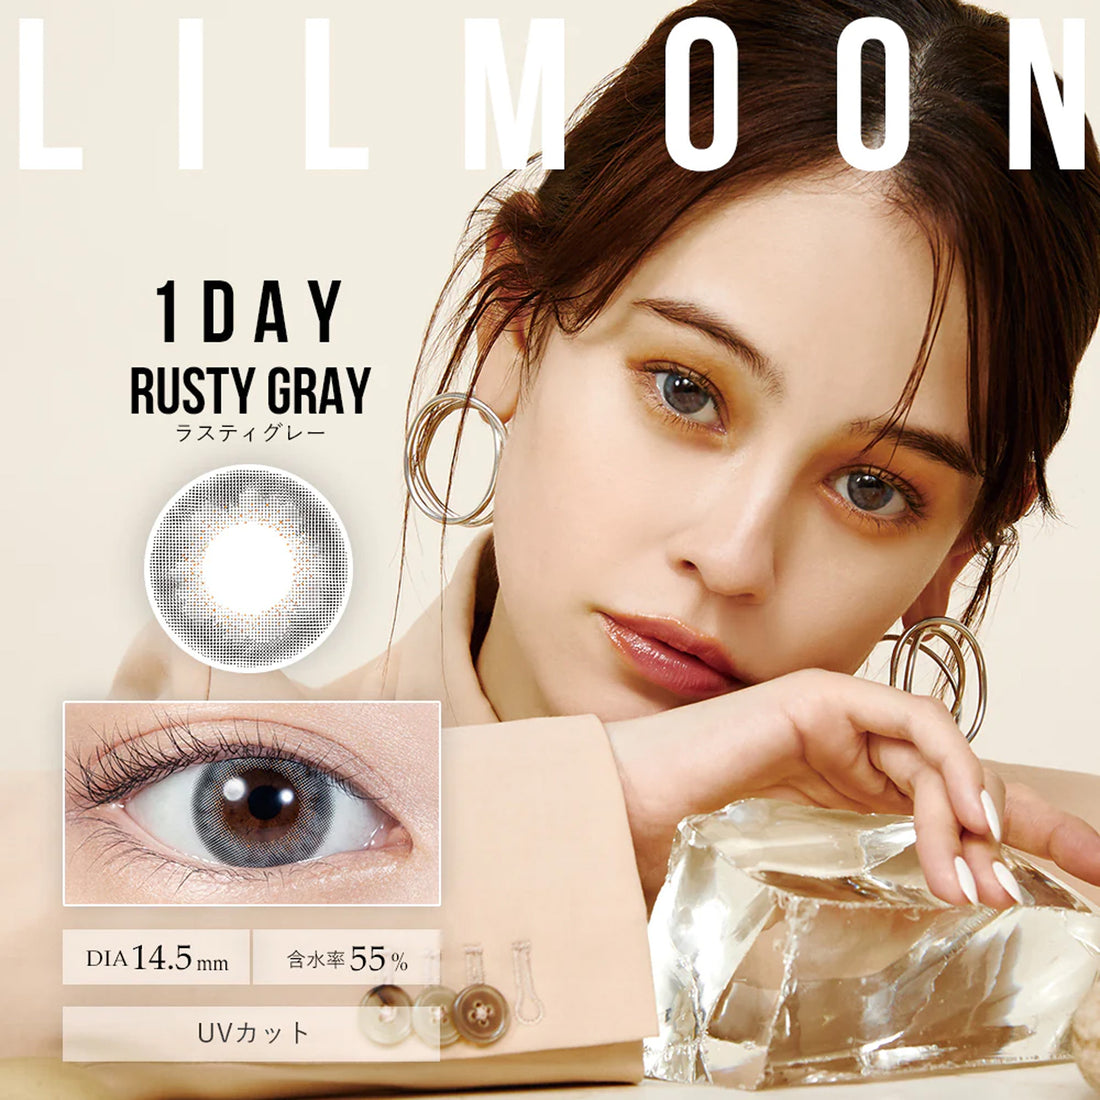 LIL MOON 1Day Contact Lenses-Rusty Gray 10pcs